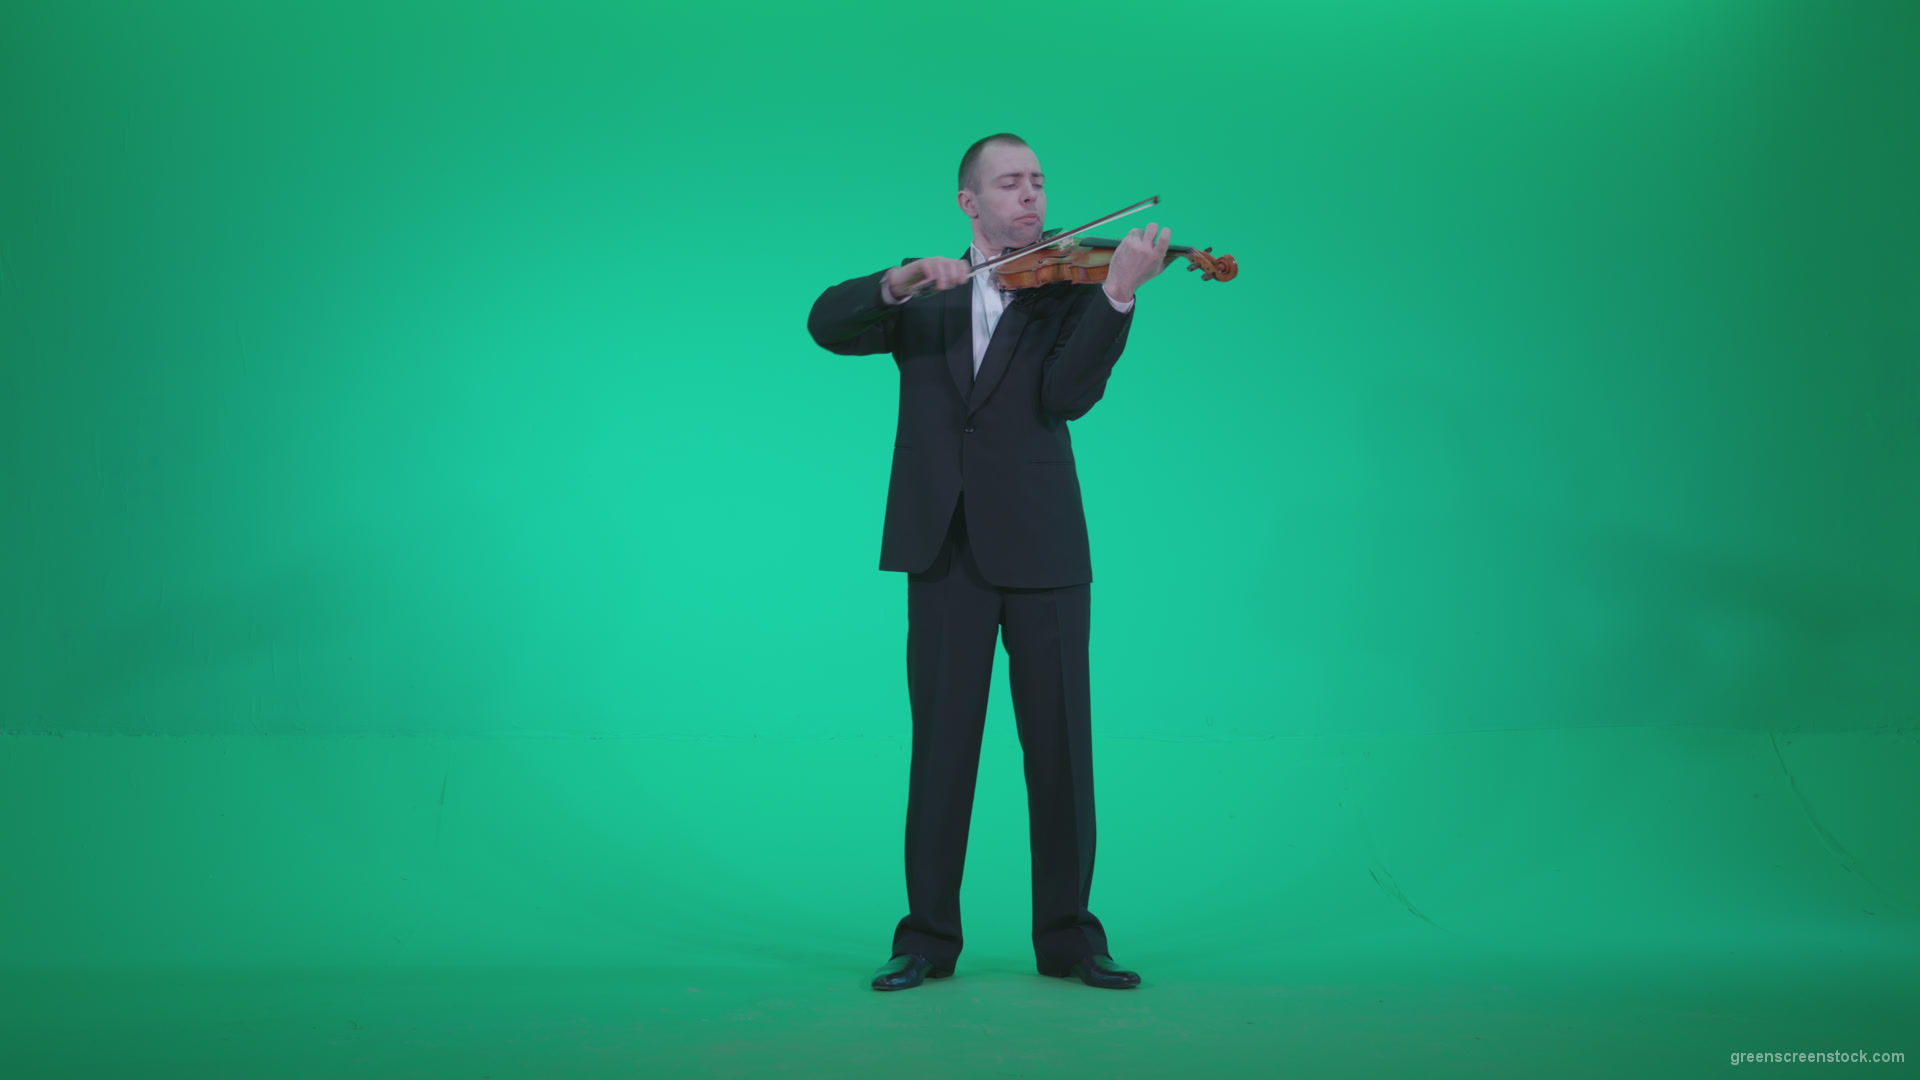 Professional-Violin-player-man-z1_004 Green Screen Stock